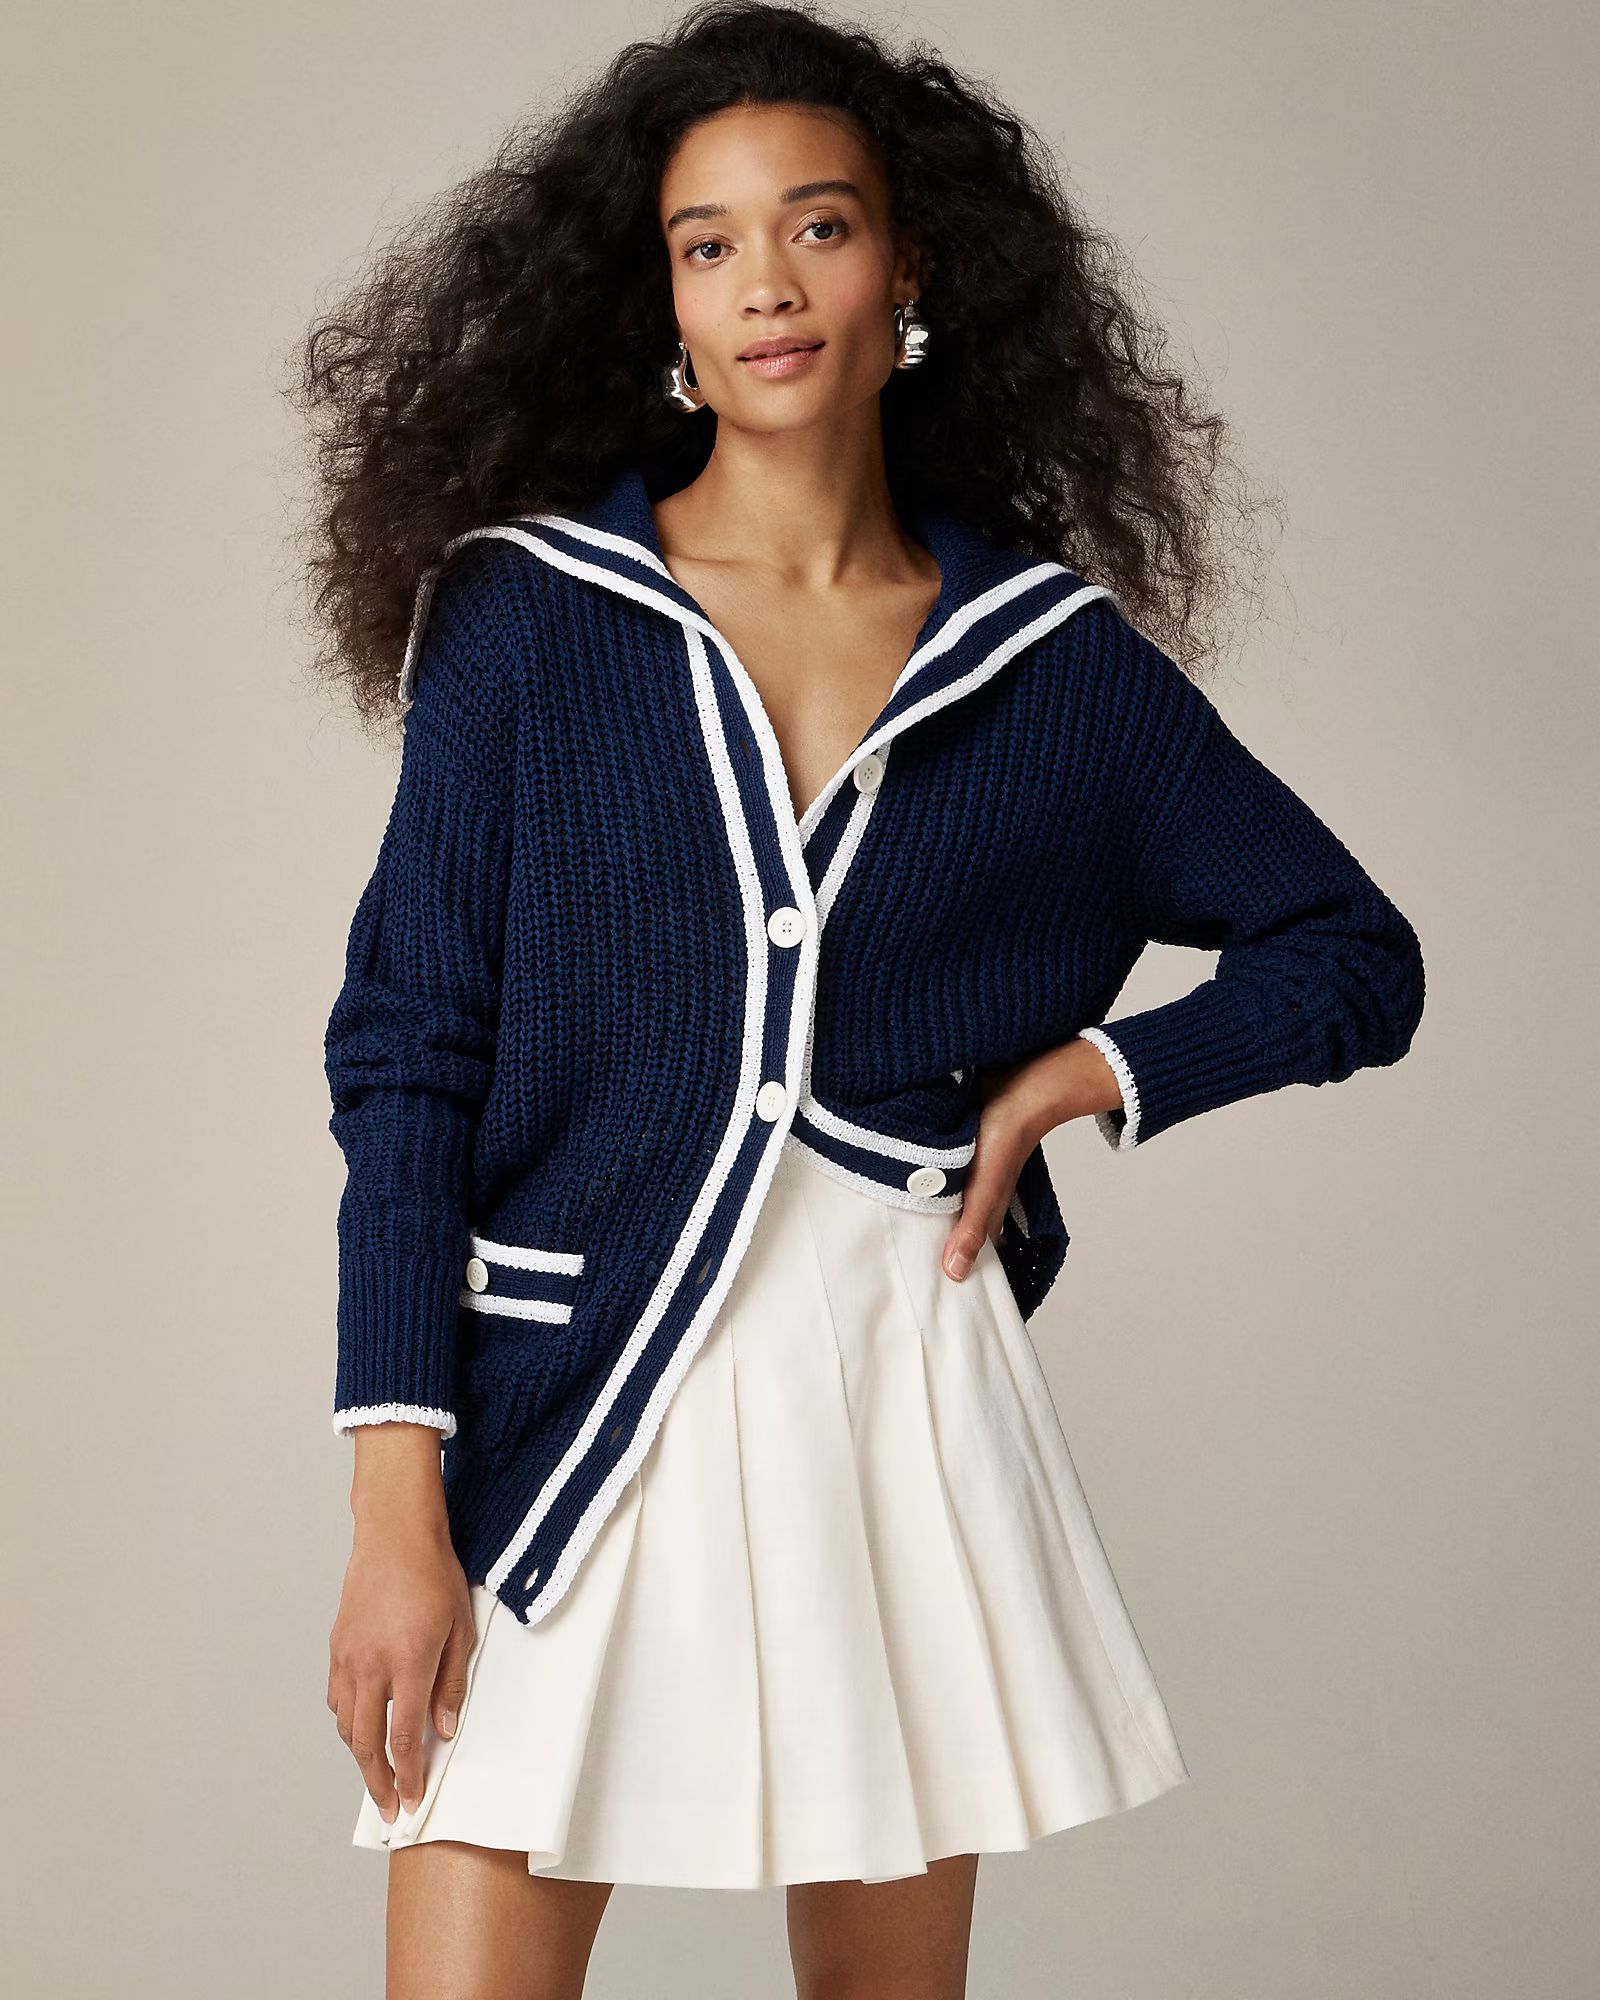 newTextured sailor cardigan sweater$158.00Dark Evening WhiteSelect a sizeSize & Fit InformationVi... | J.Crew US